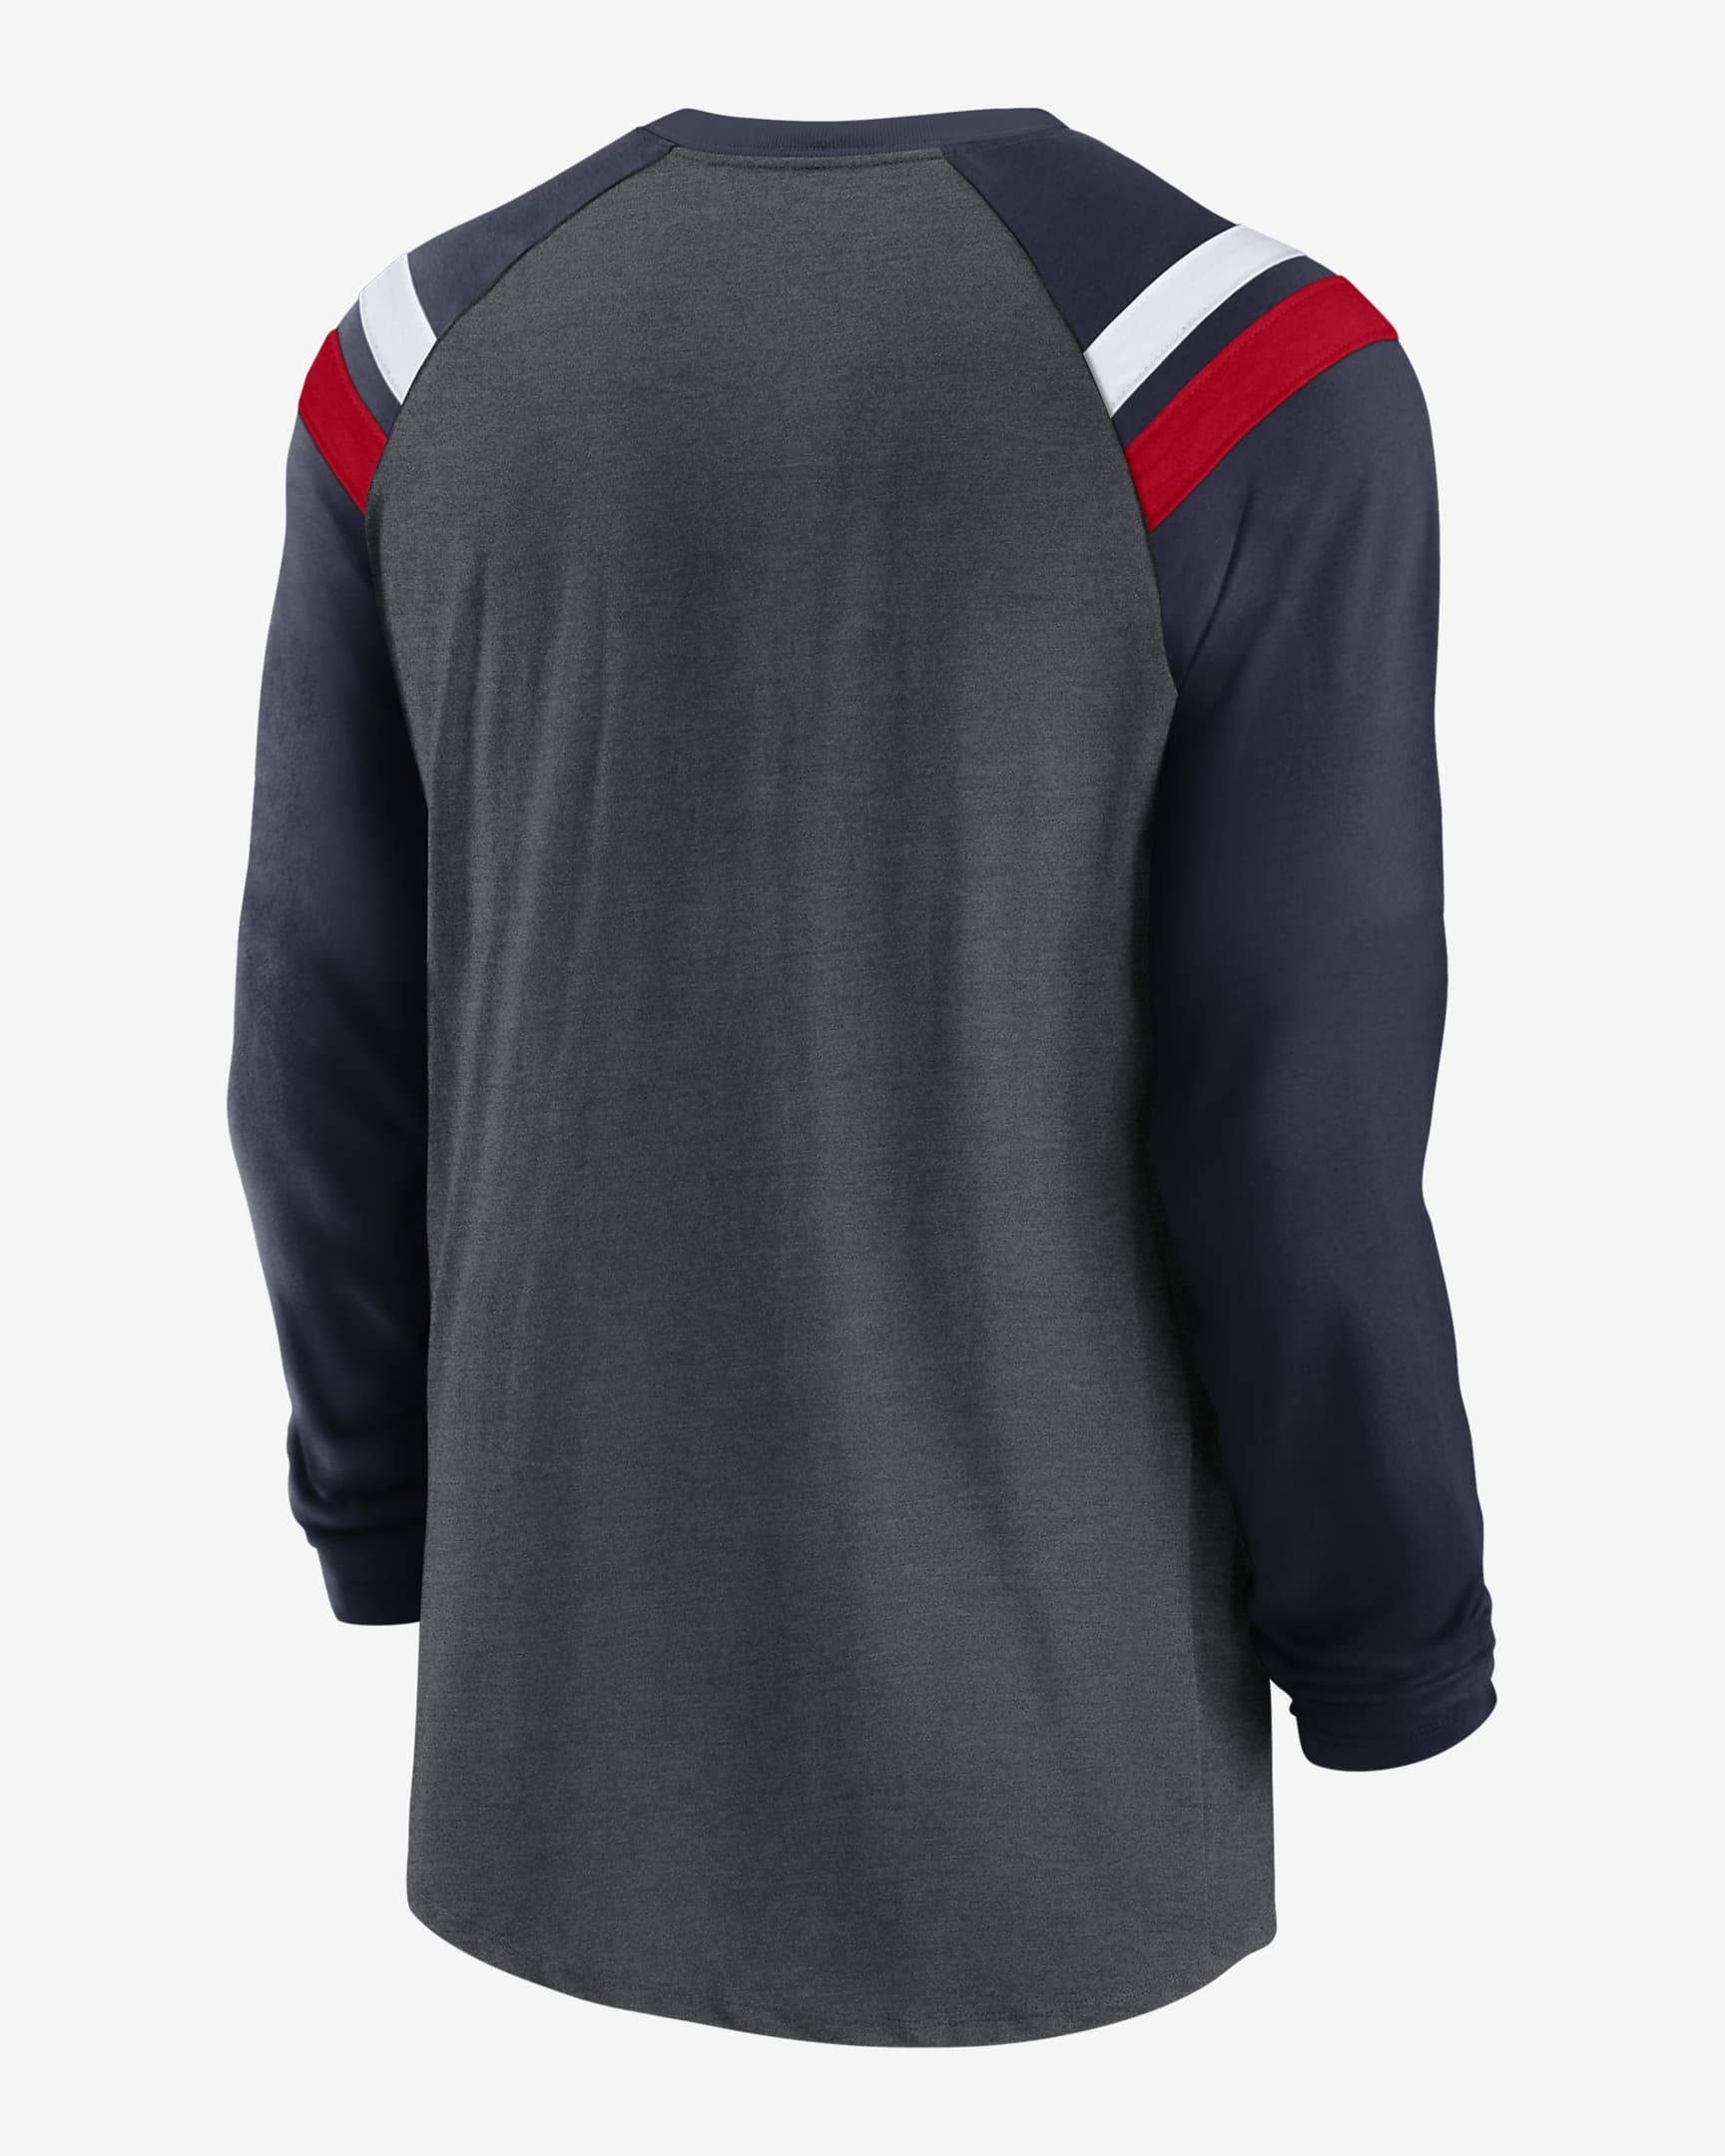 Nike Athletic Fashion (NFL New England Patriots) Men's Long-Sleeve T ...